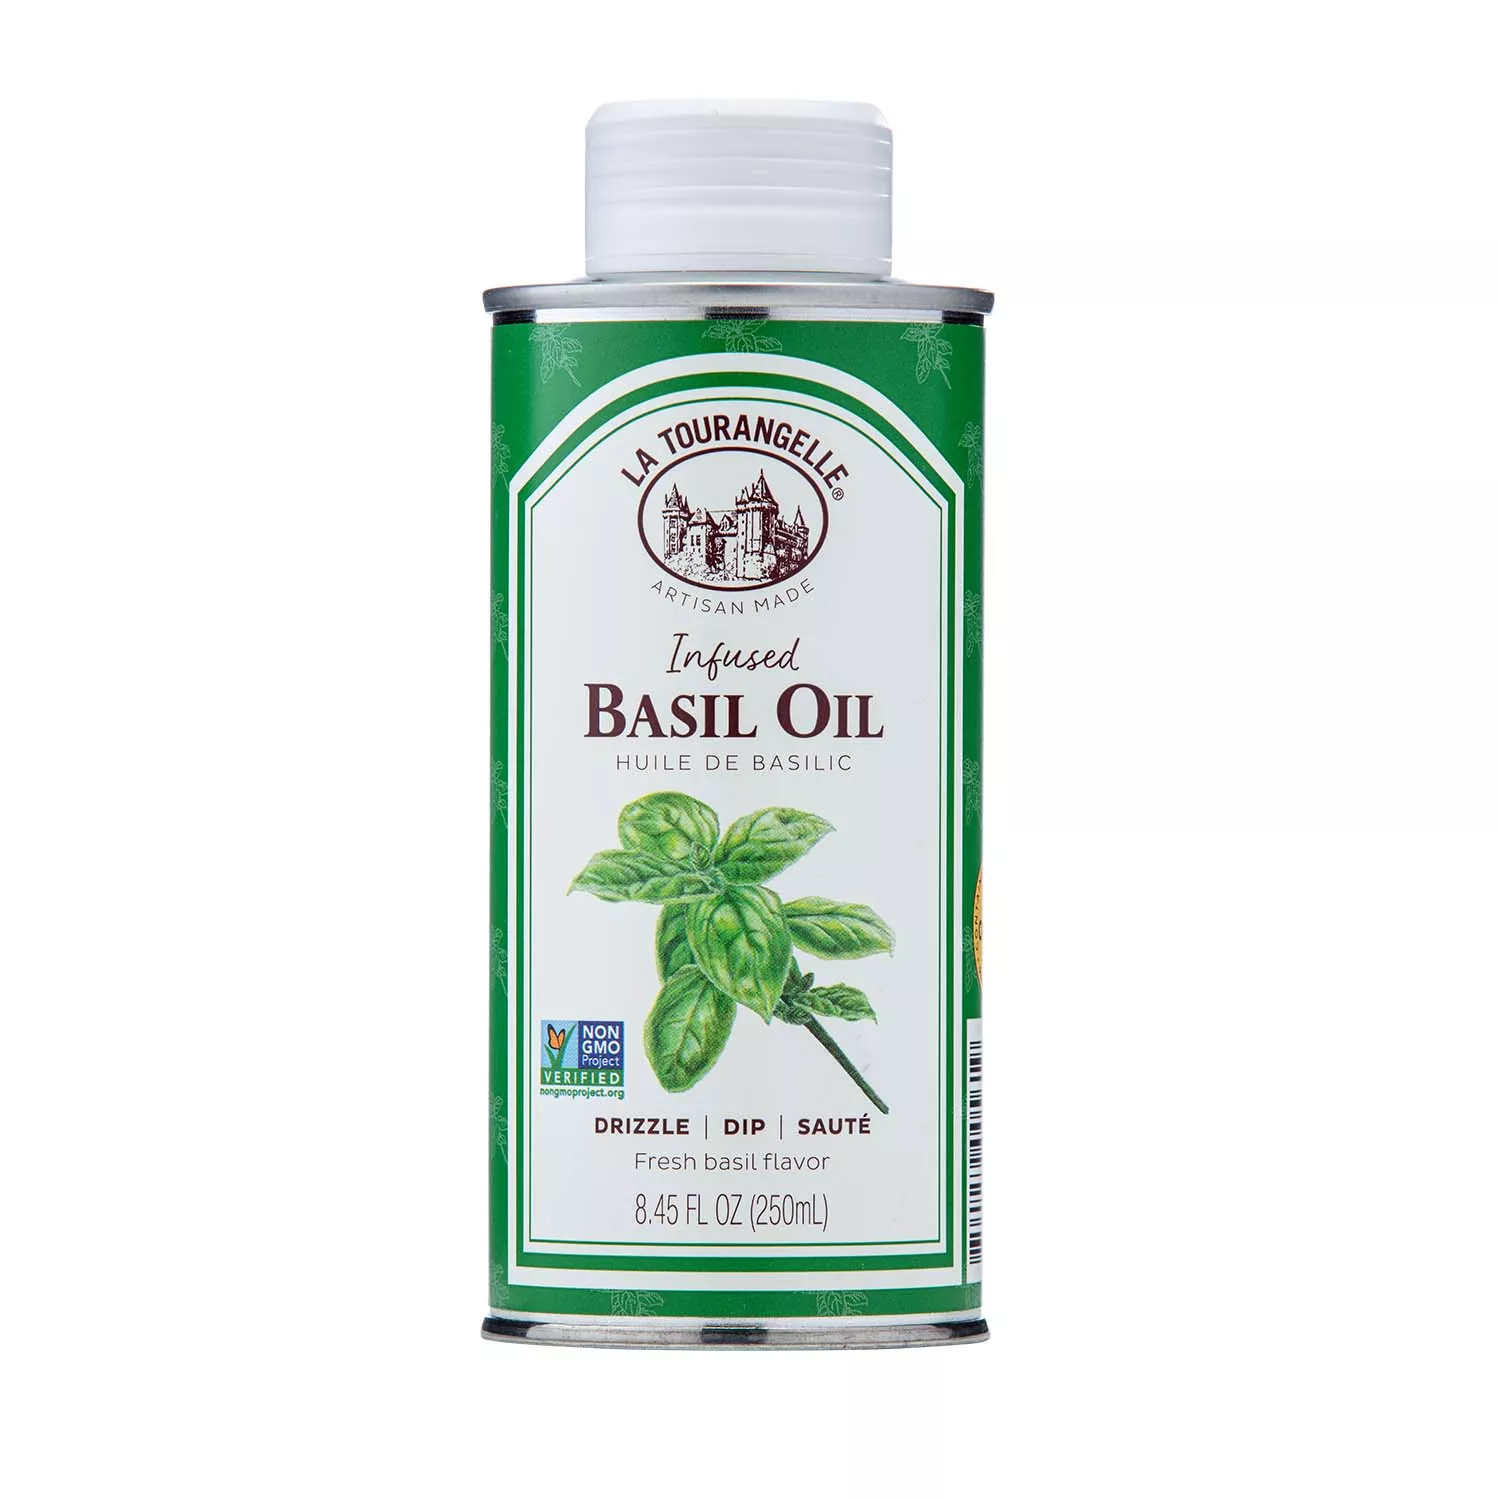 La Tourangelle Basil Oil